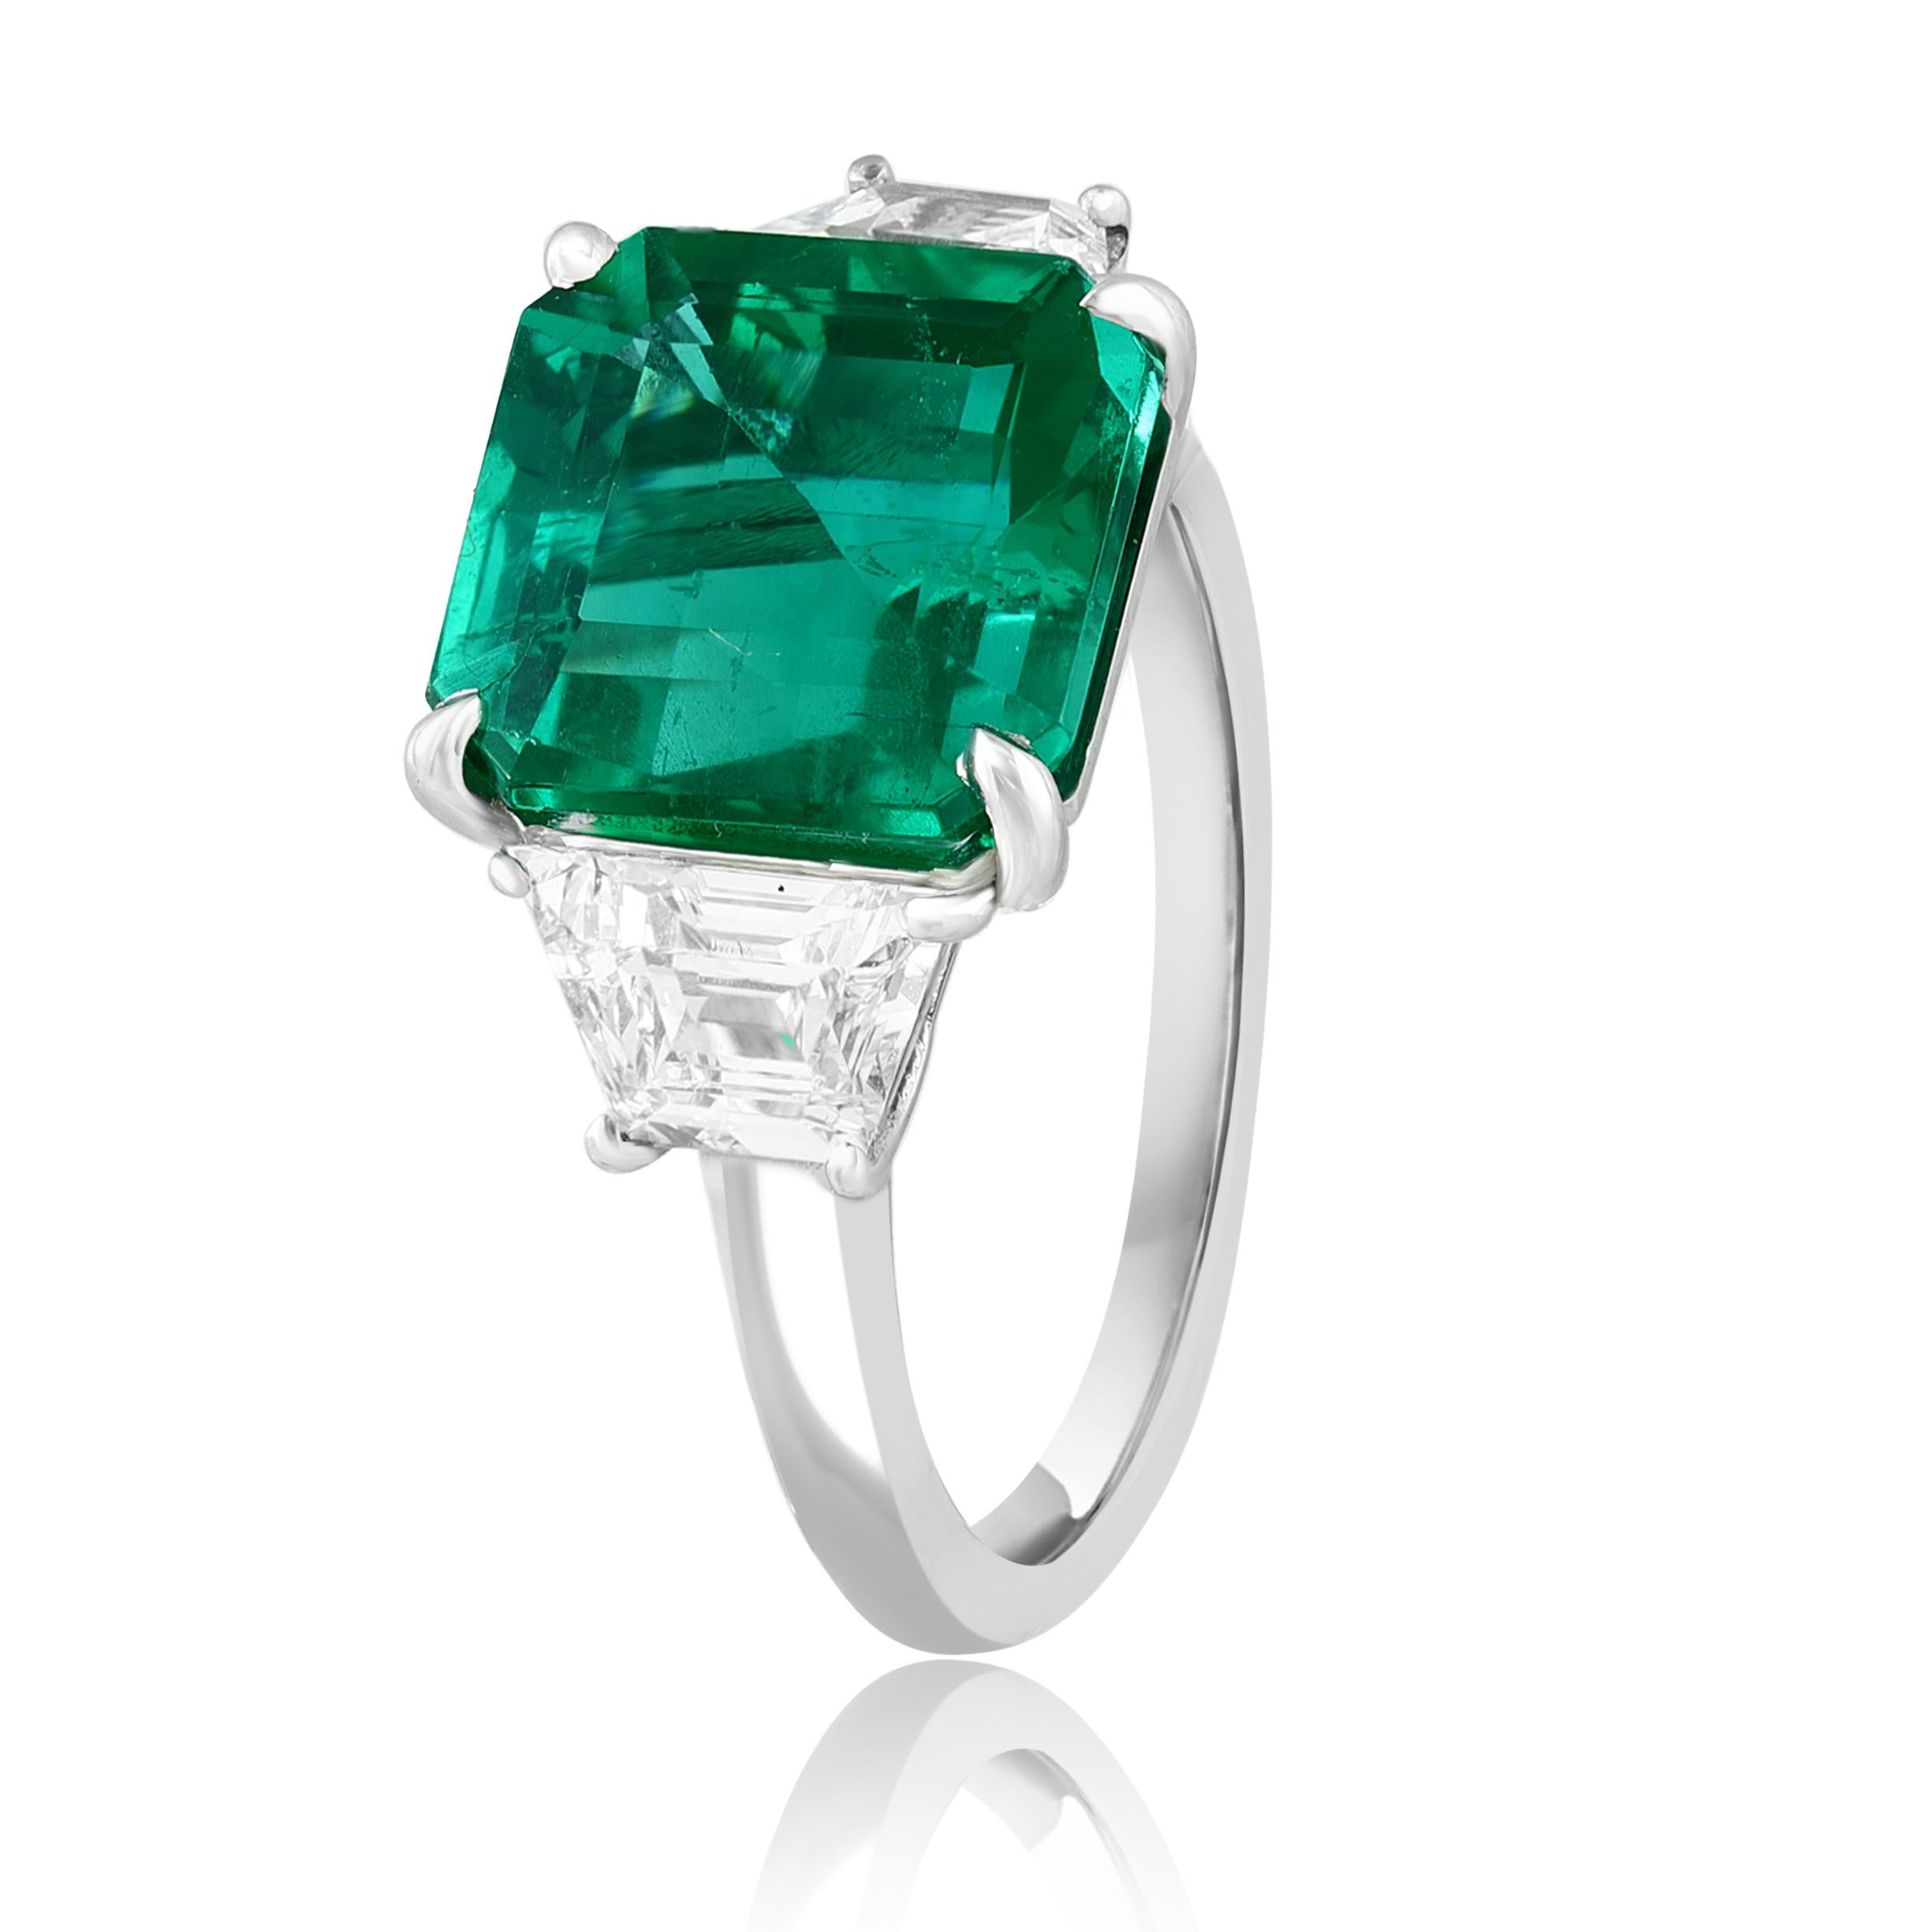 Women's Certified 4.78 Carat Emerald Cut Emerald Diamond Engagement Ring in Platinum For Sale